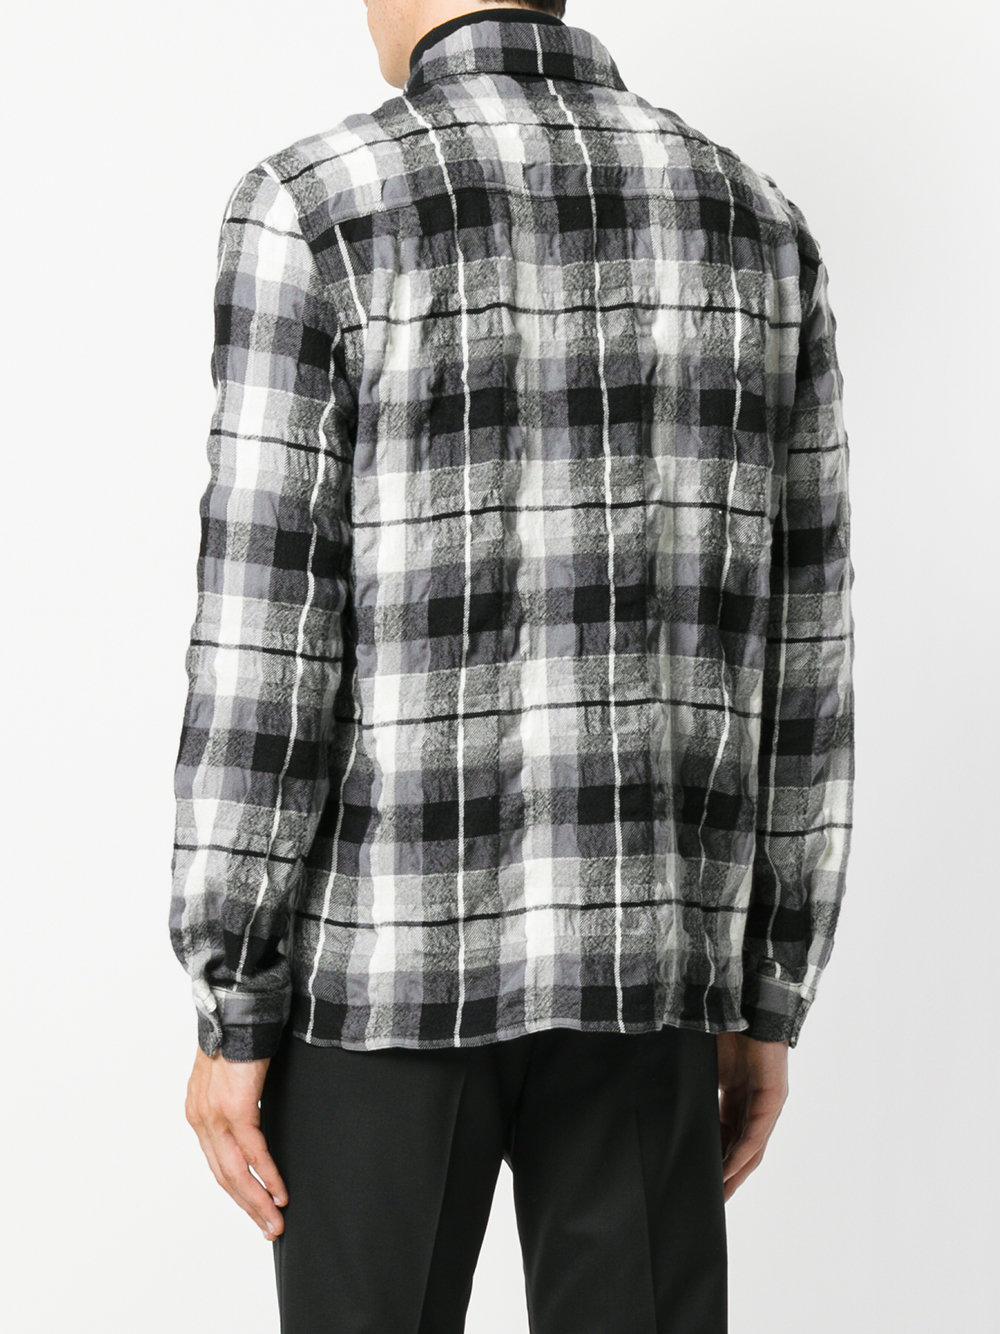 Haider Ackermann Wool Creased Effect Plaid Shirt in Black for Men - Lyst